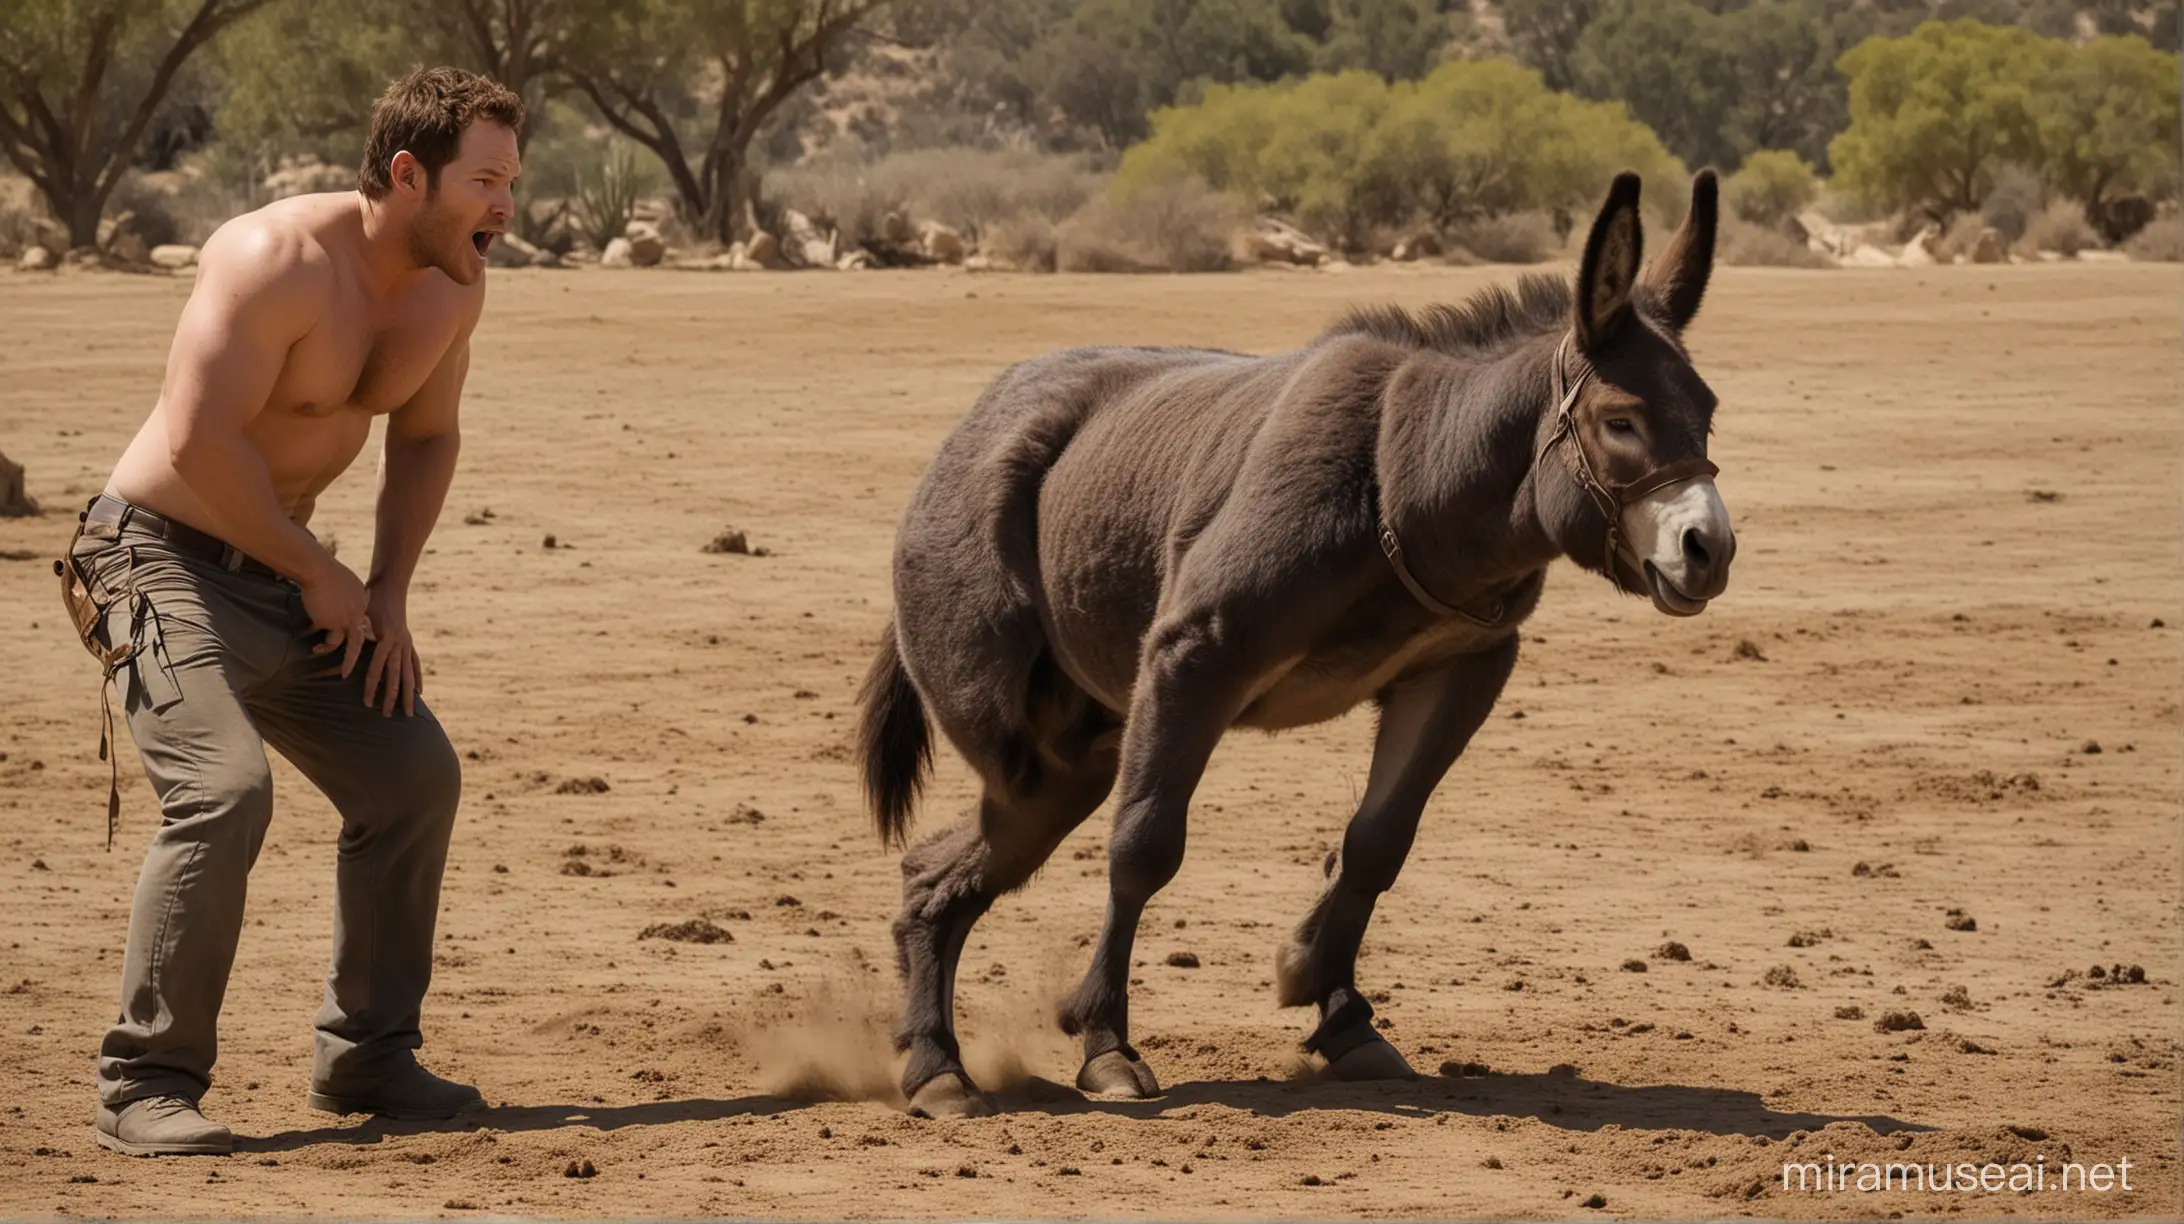 Chris Pratt Transformation into Donkey with Human Head